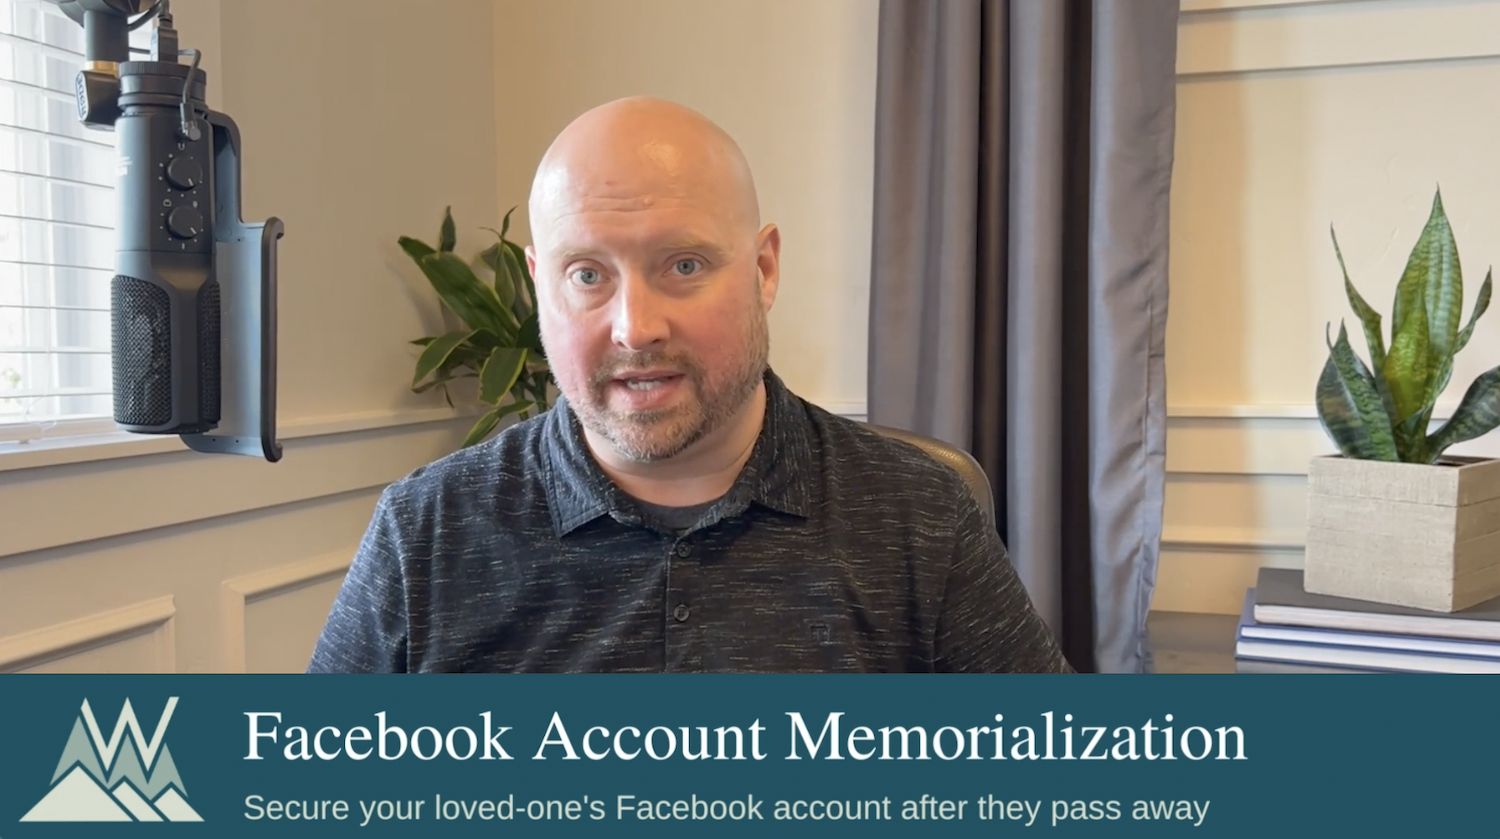 Memorialize a Facebook account loading image for virtual memorial